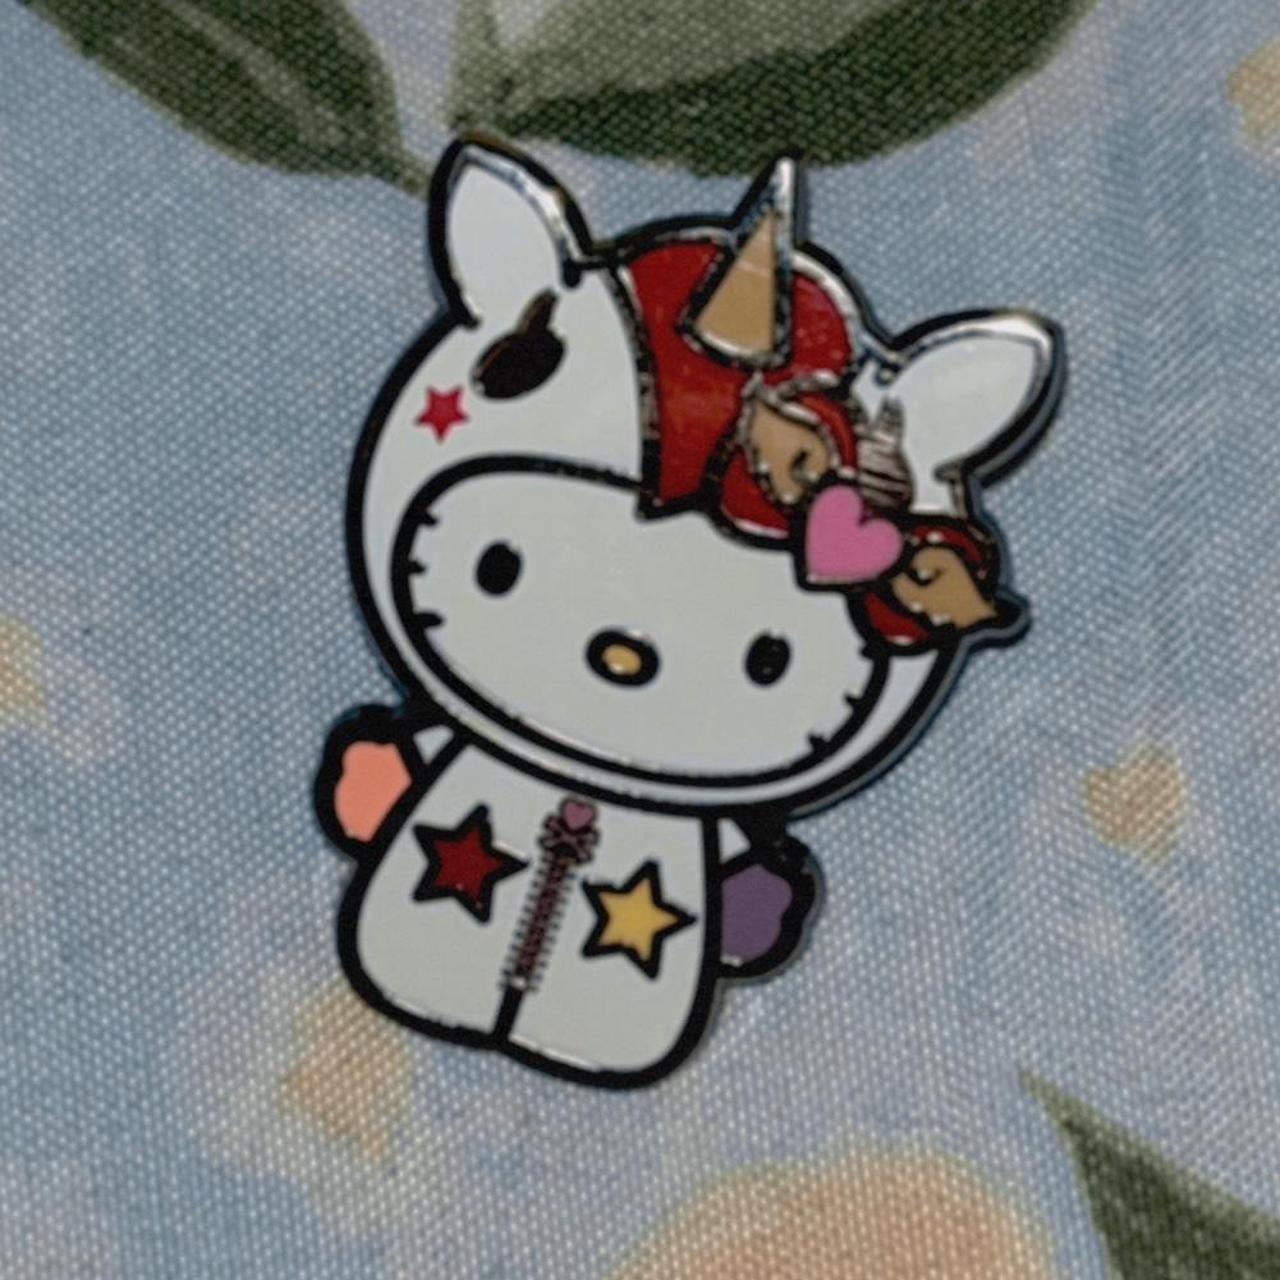 Tokidoki x Hello Kitty and Friends Hello Kitty Patch